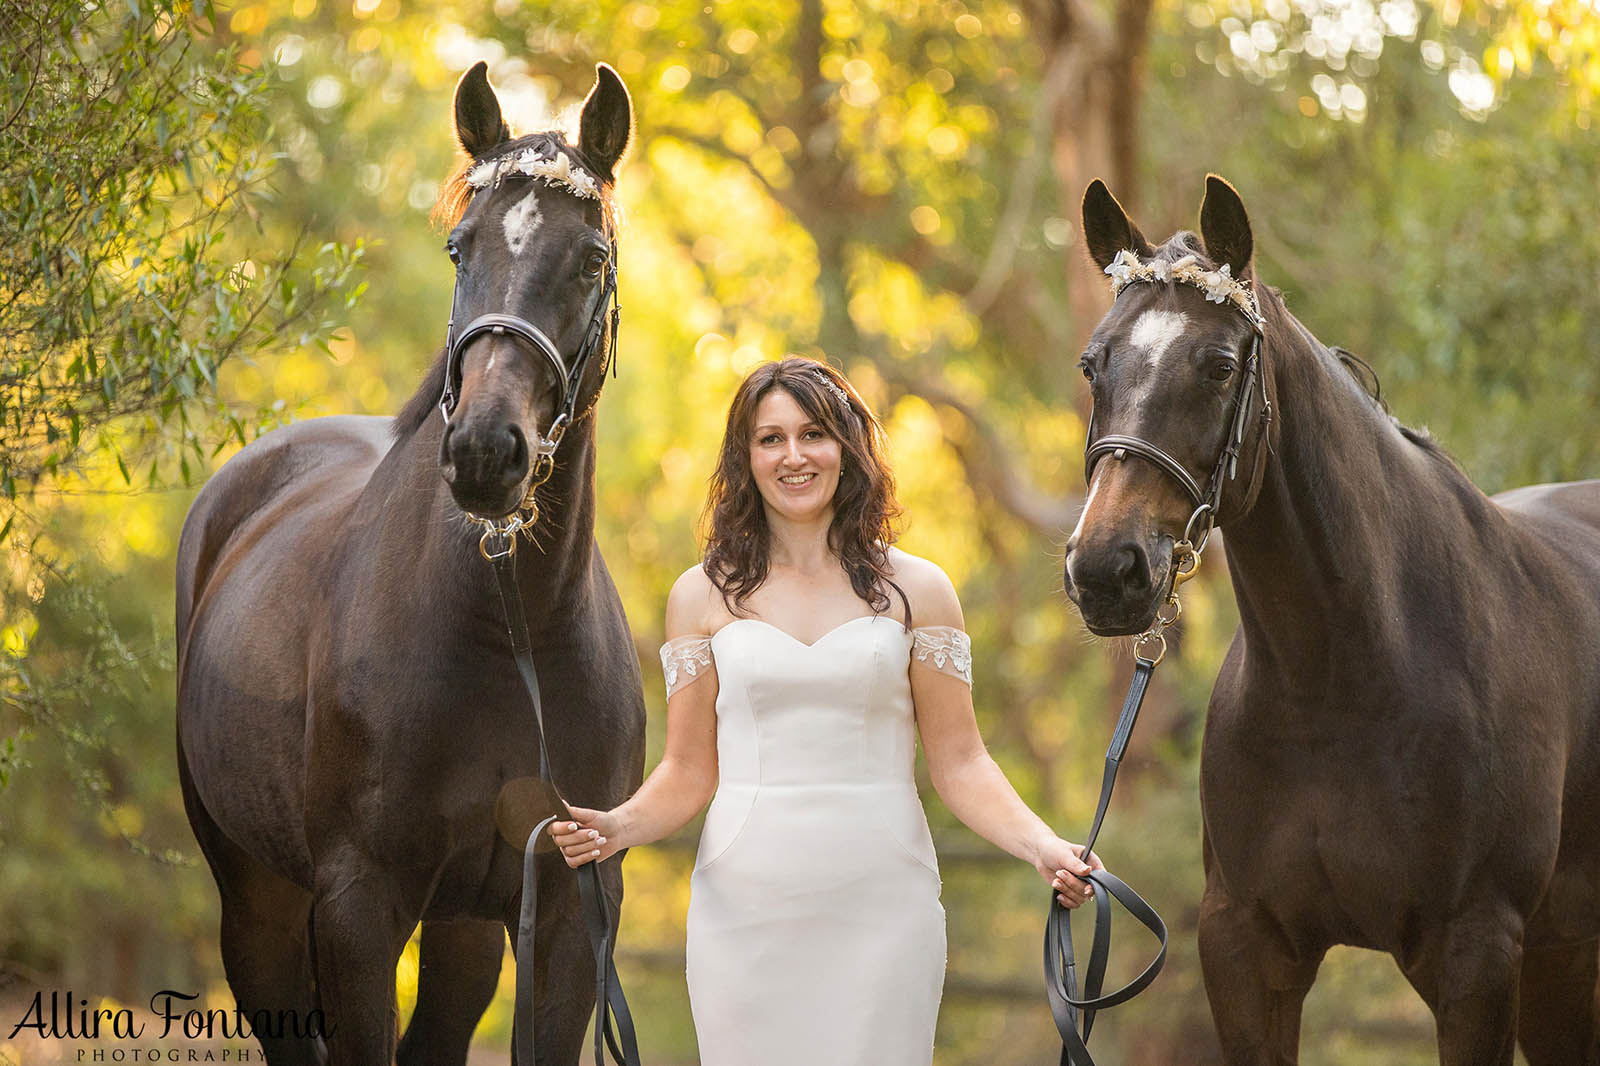 Victoria's wedding photo session at Galston Rural Spots Facility 